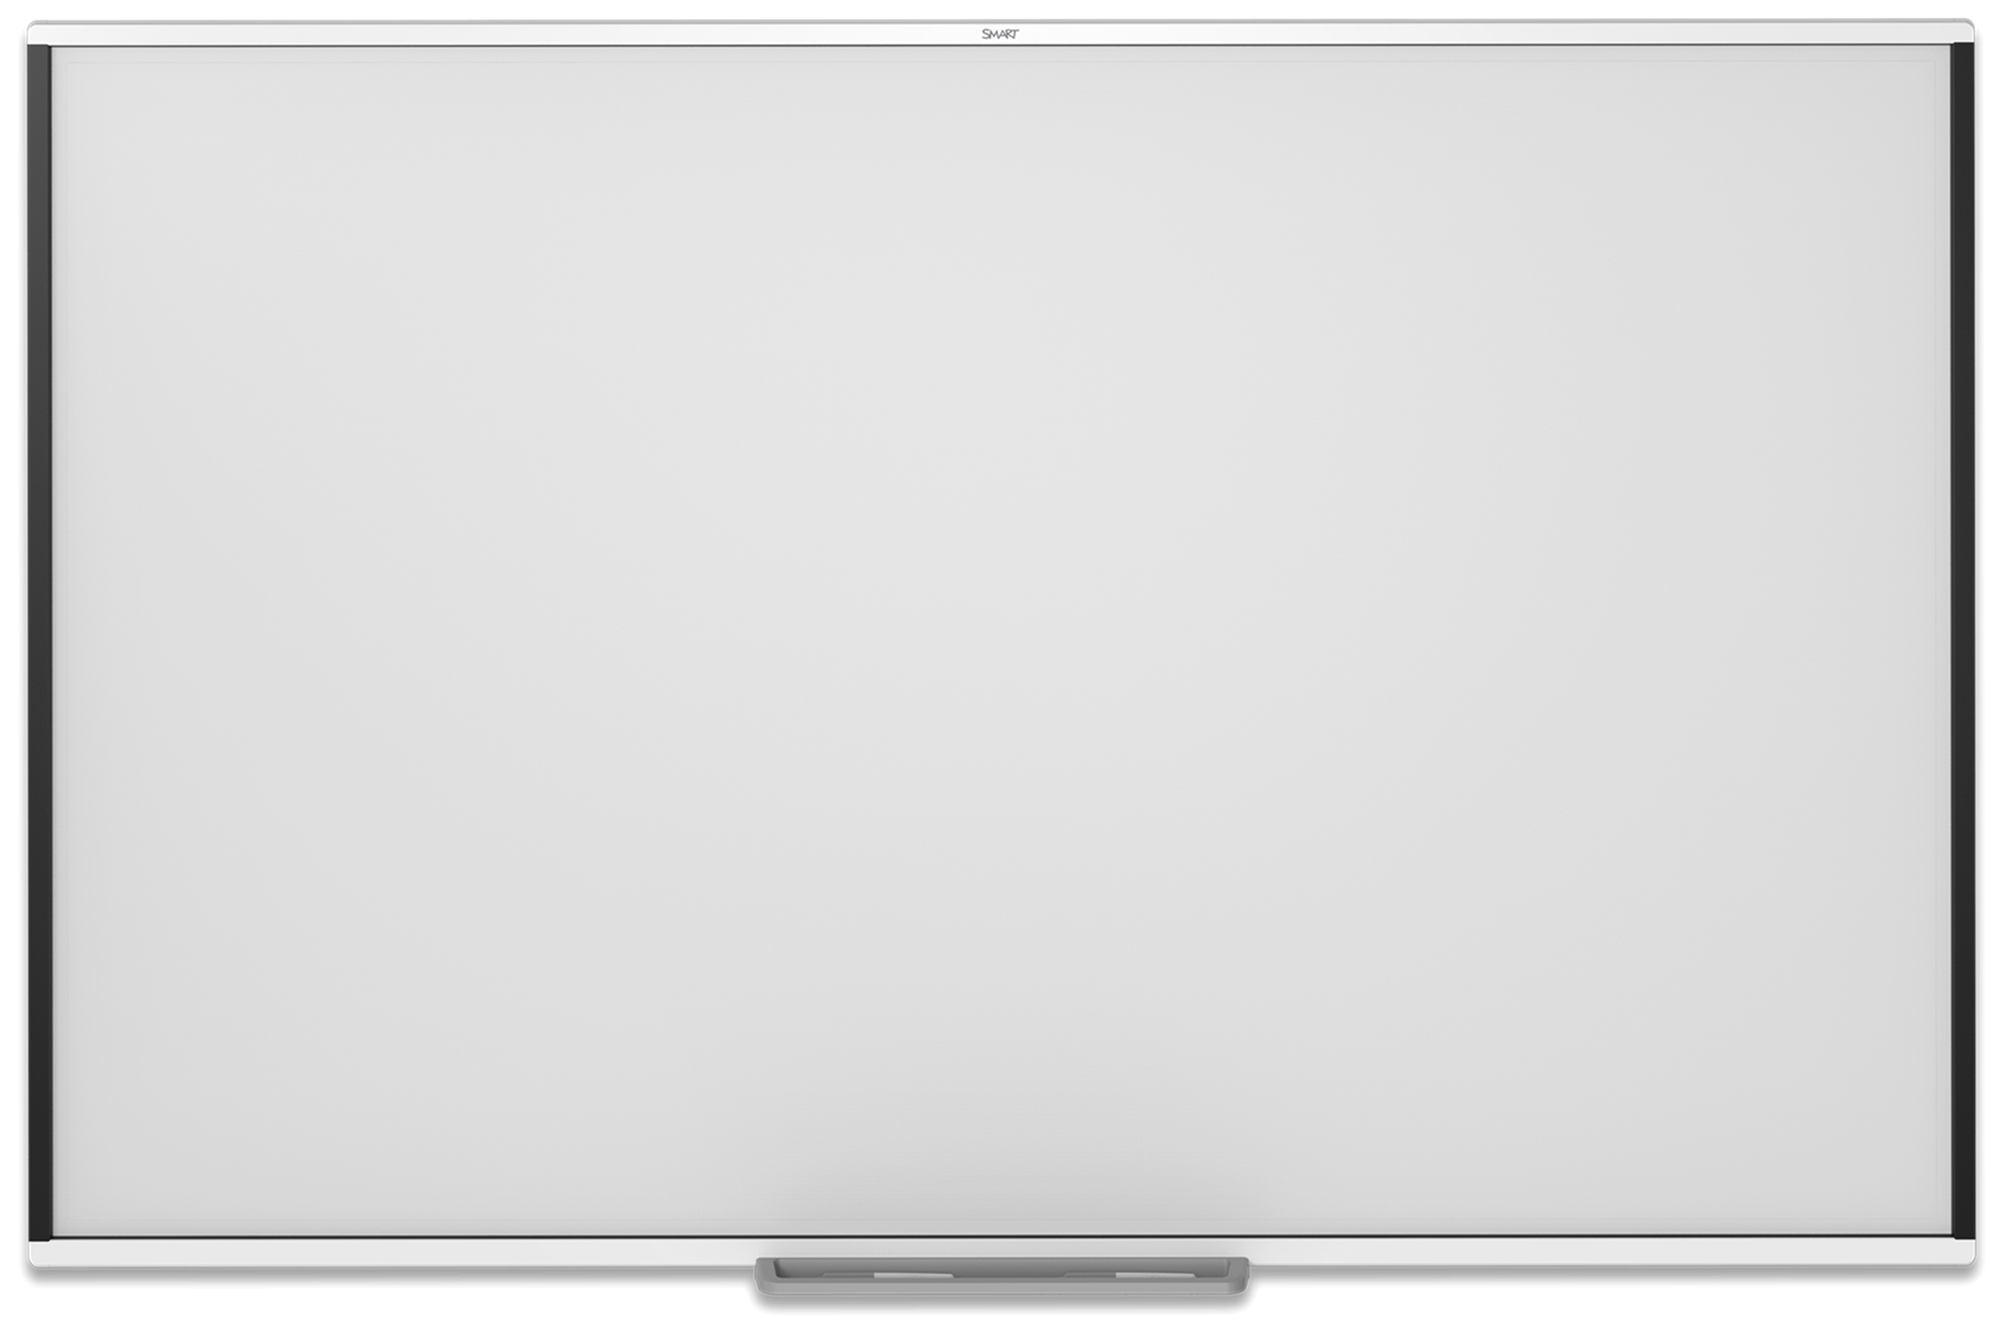 SMART Board M700V series interactive whiteboard